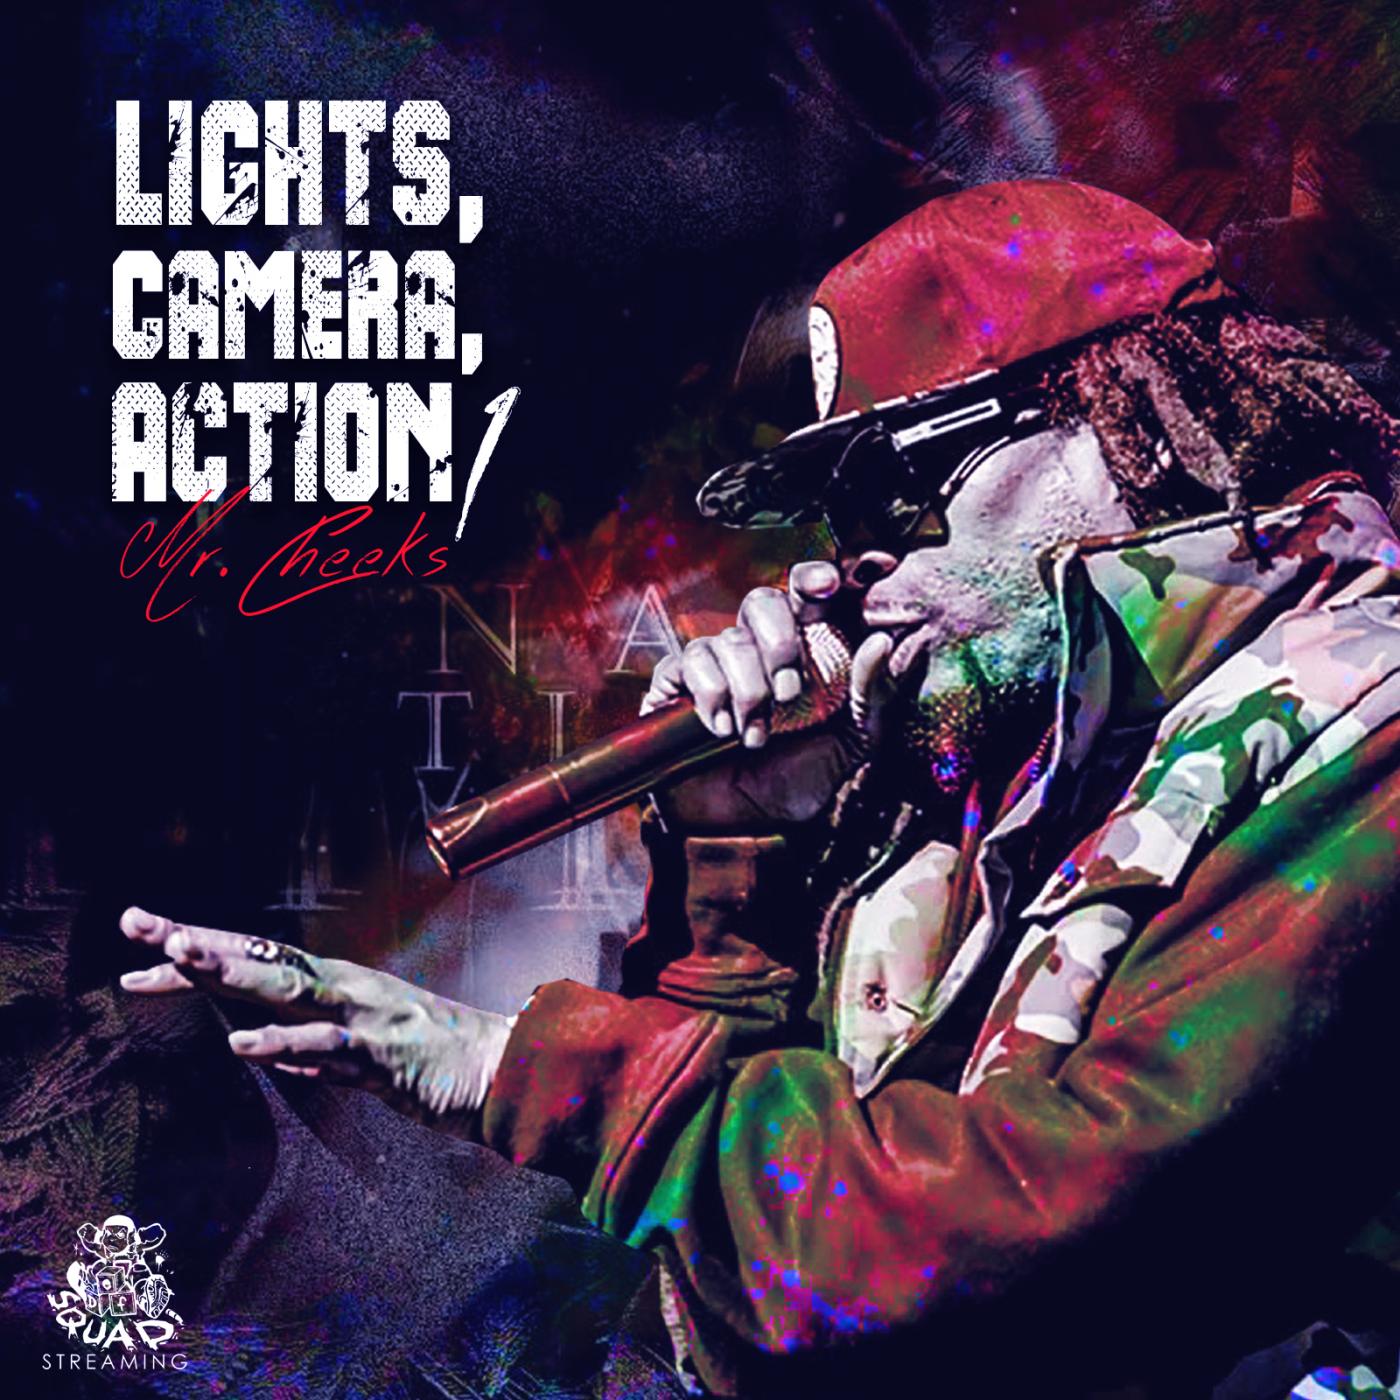 Lights, Camera, Action 1